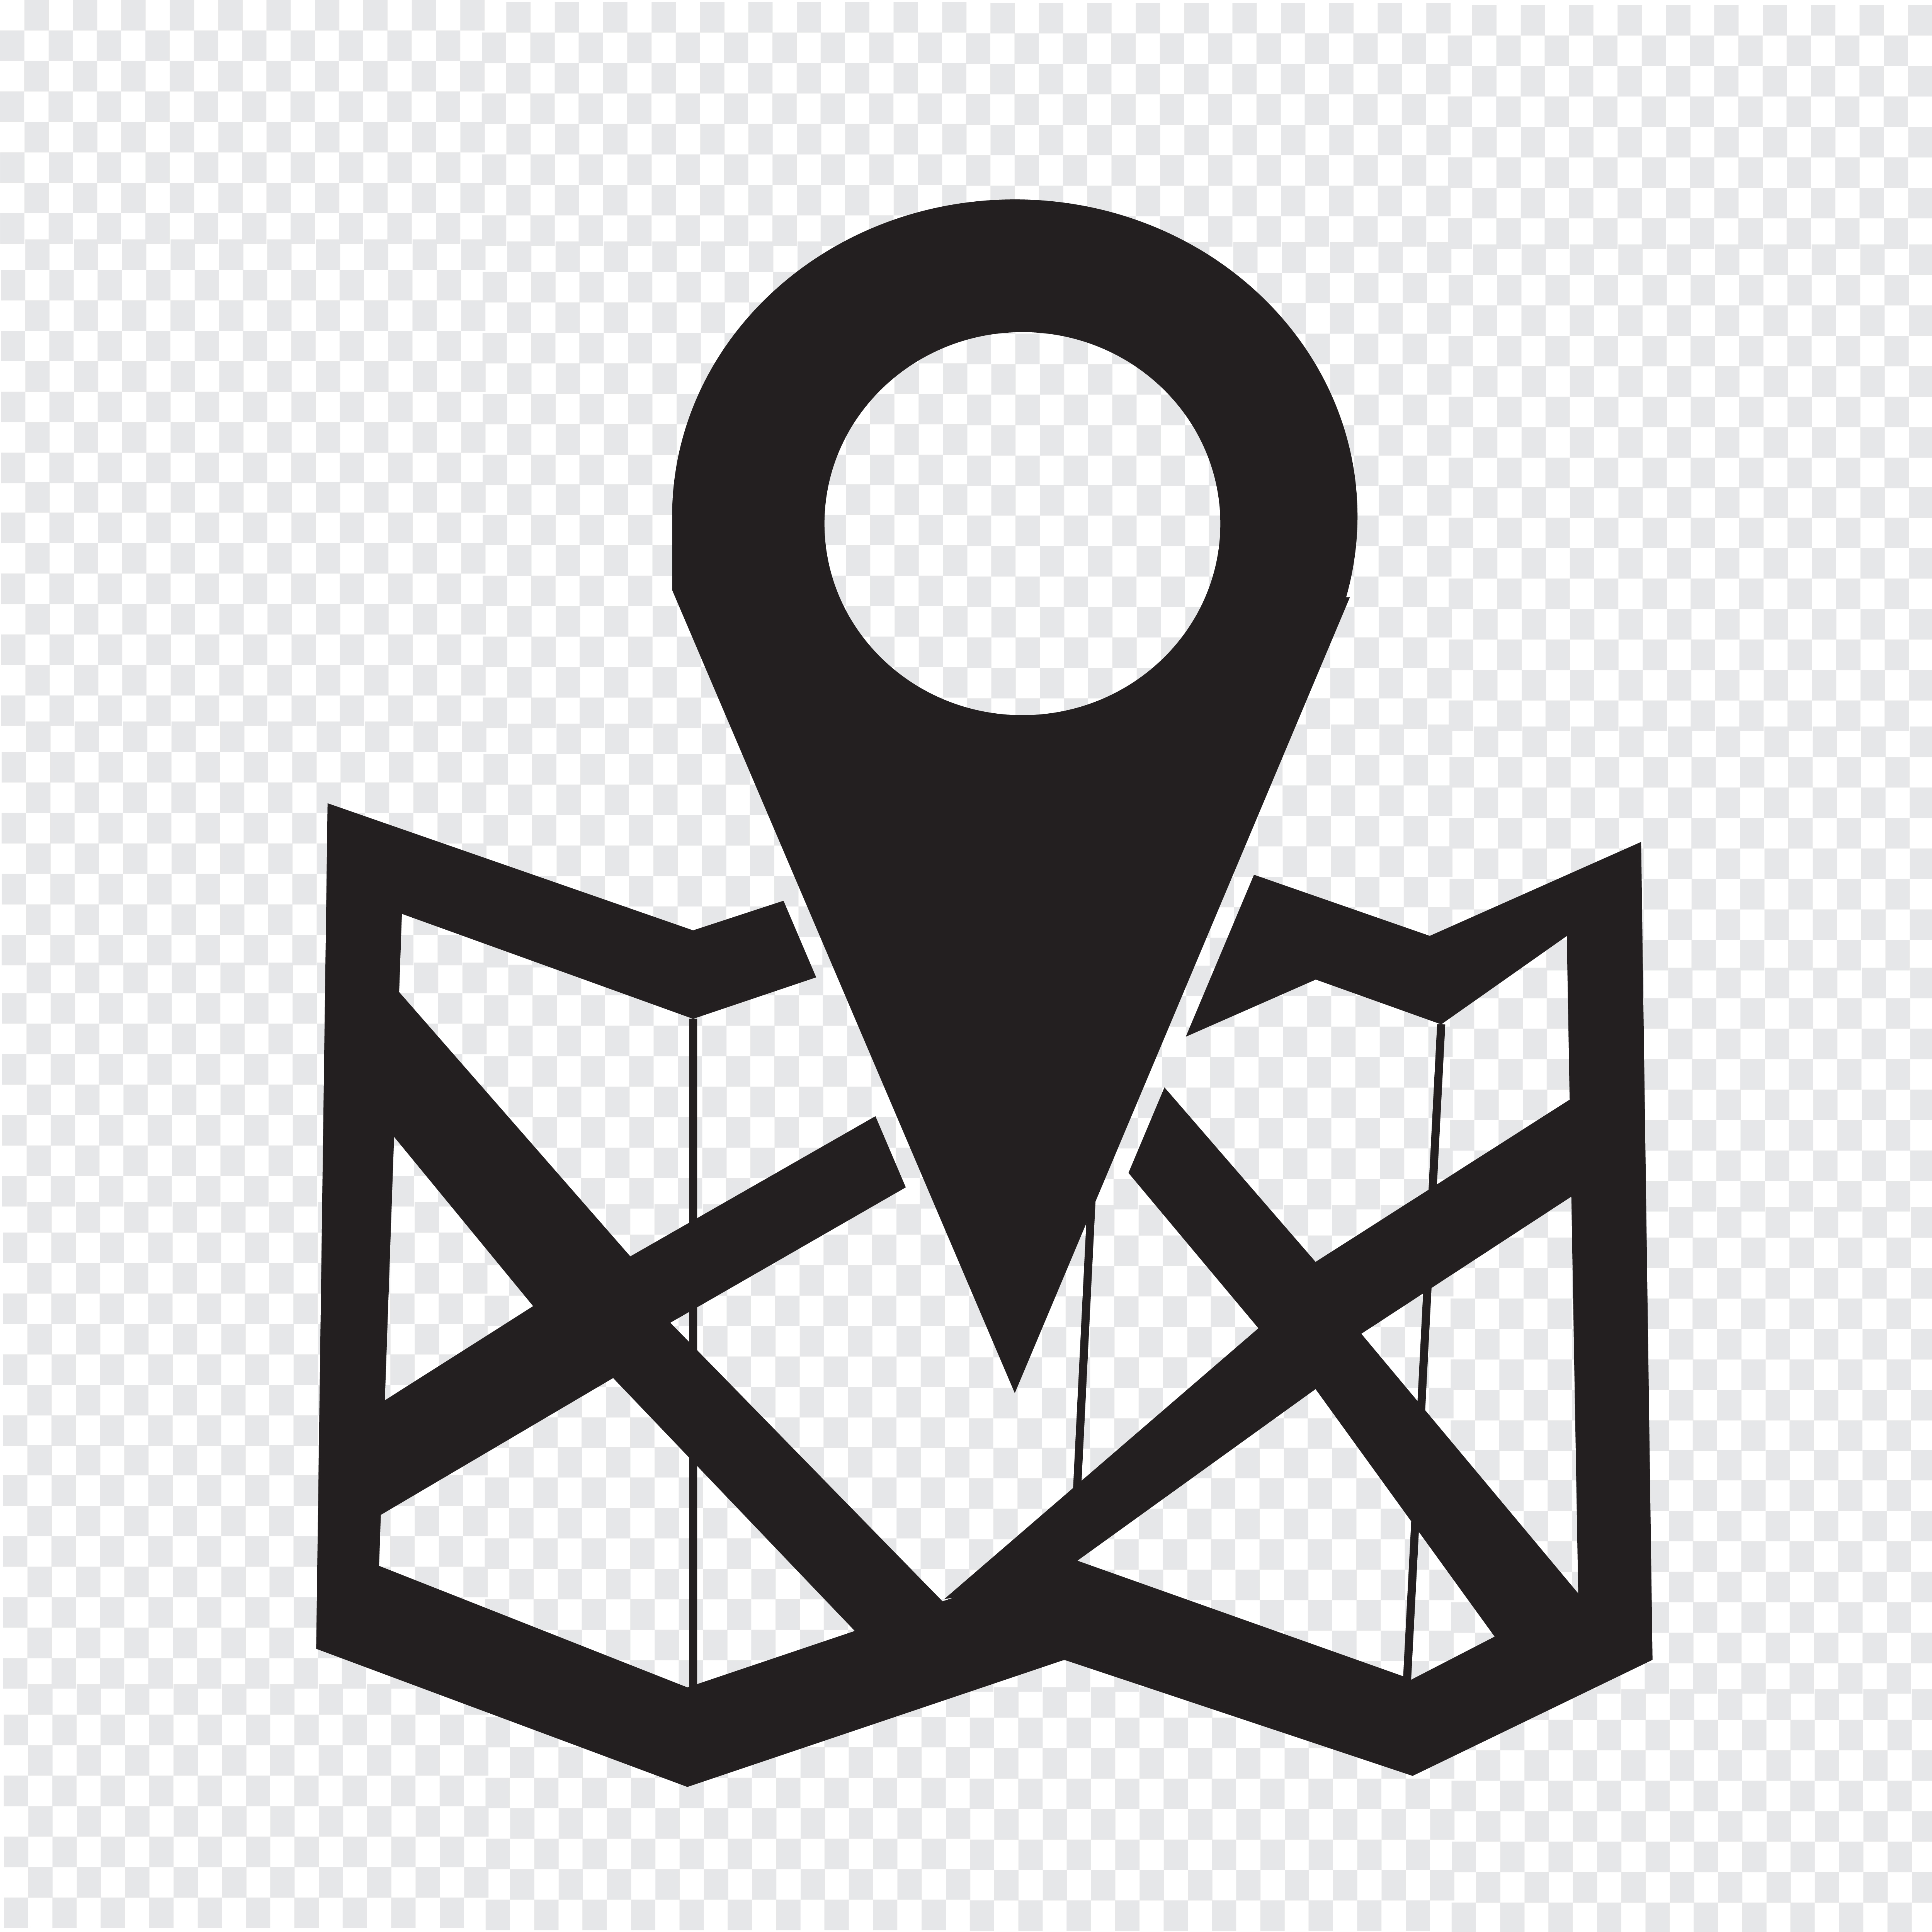 Download location icon symbol sign - Download Free Vectors, Clipart ...